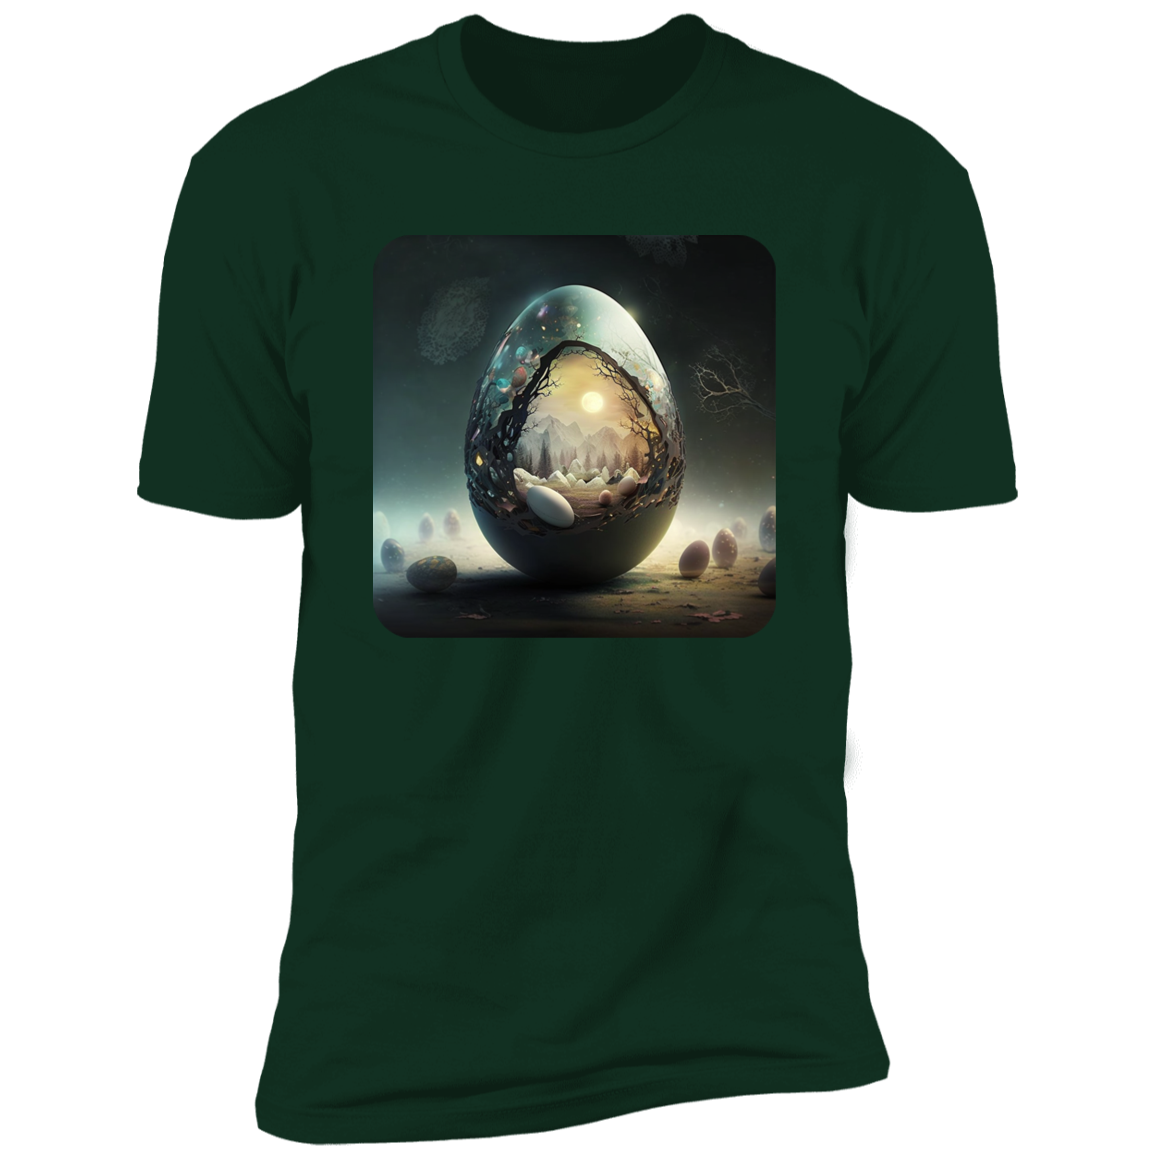 Otherworldly Egg #2